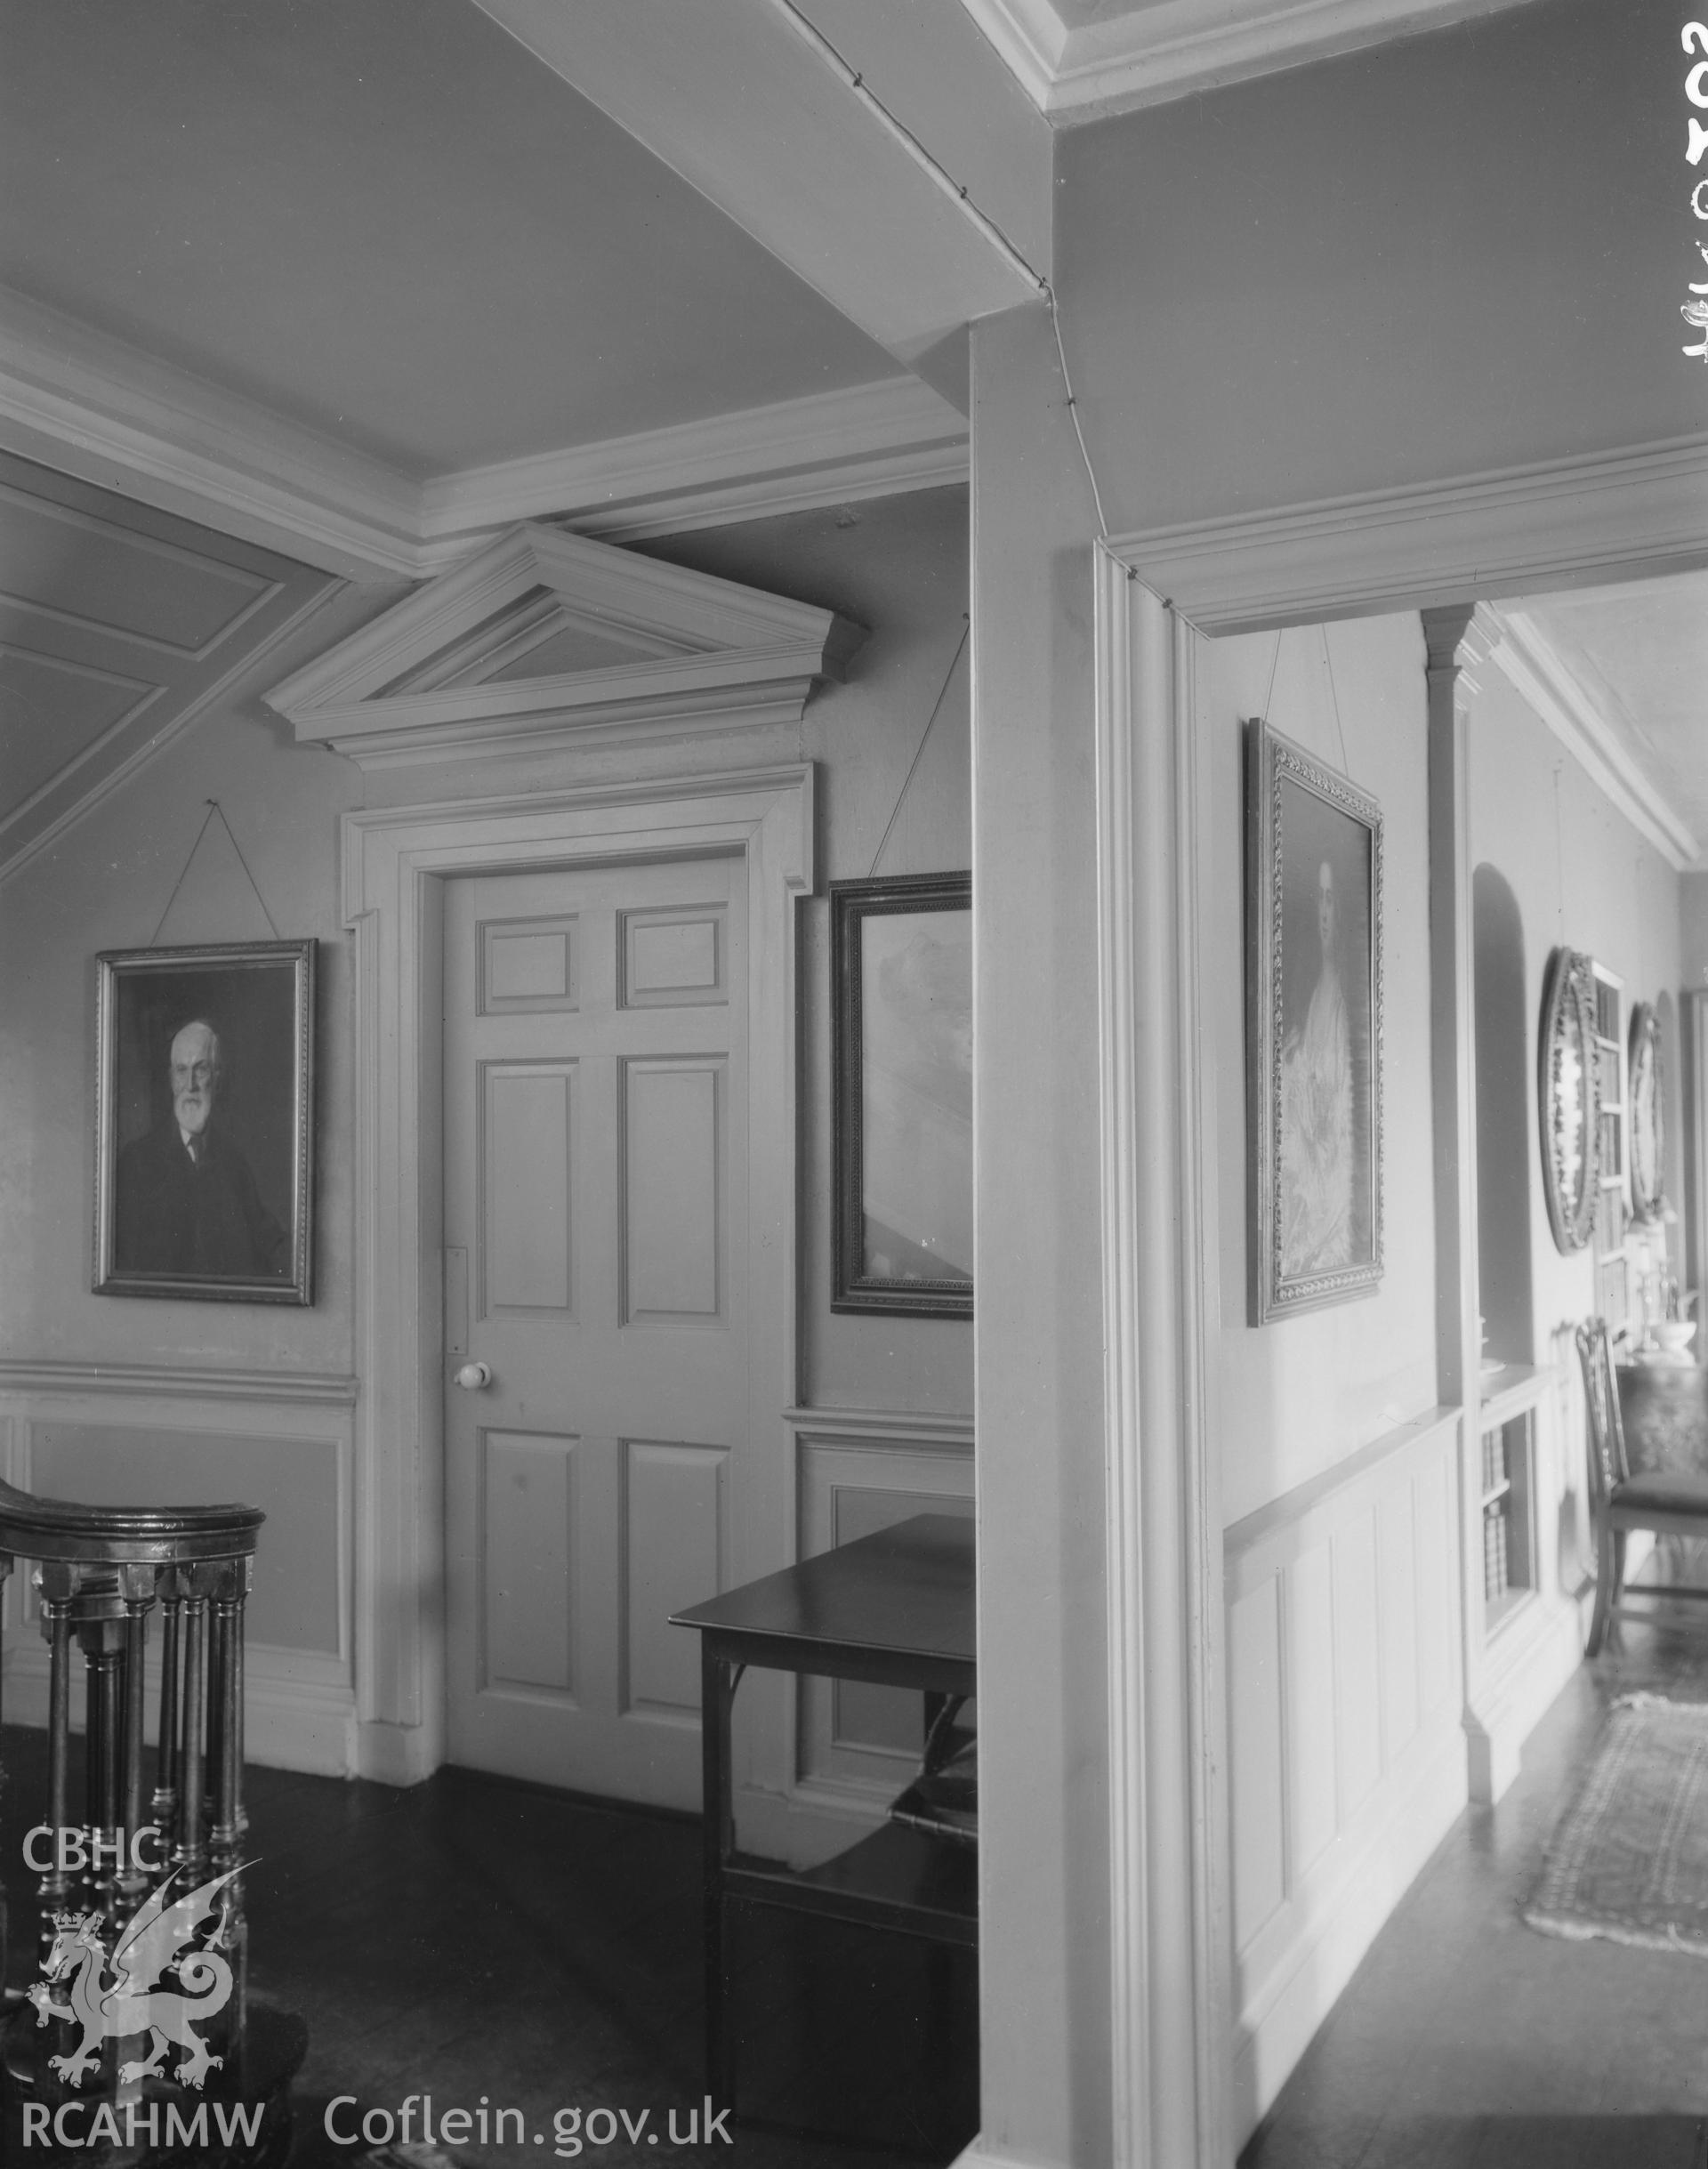 View of doorway to drawing room